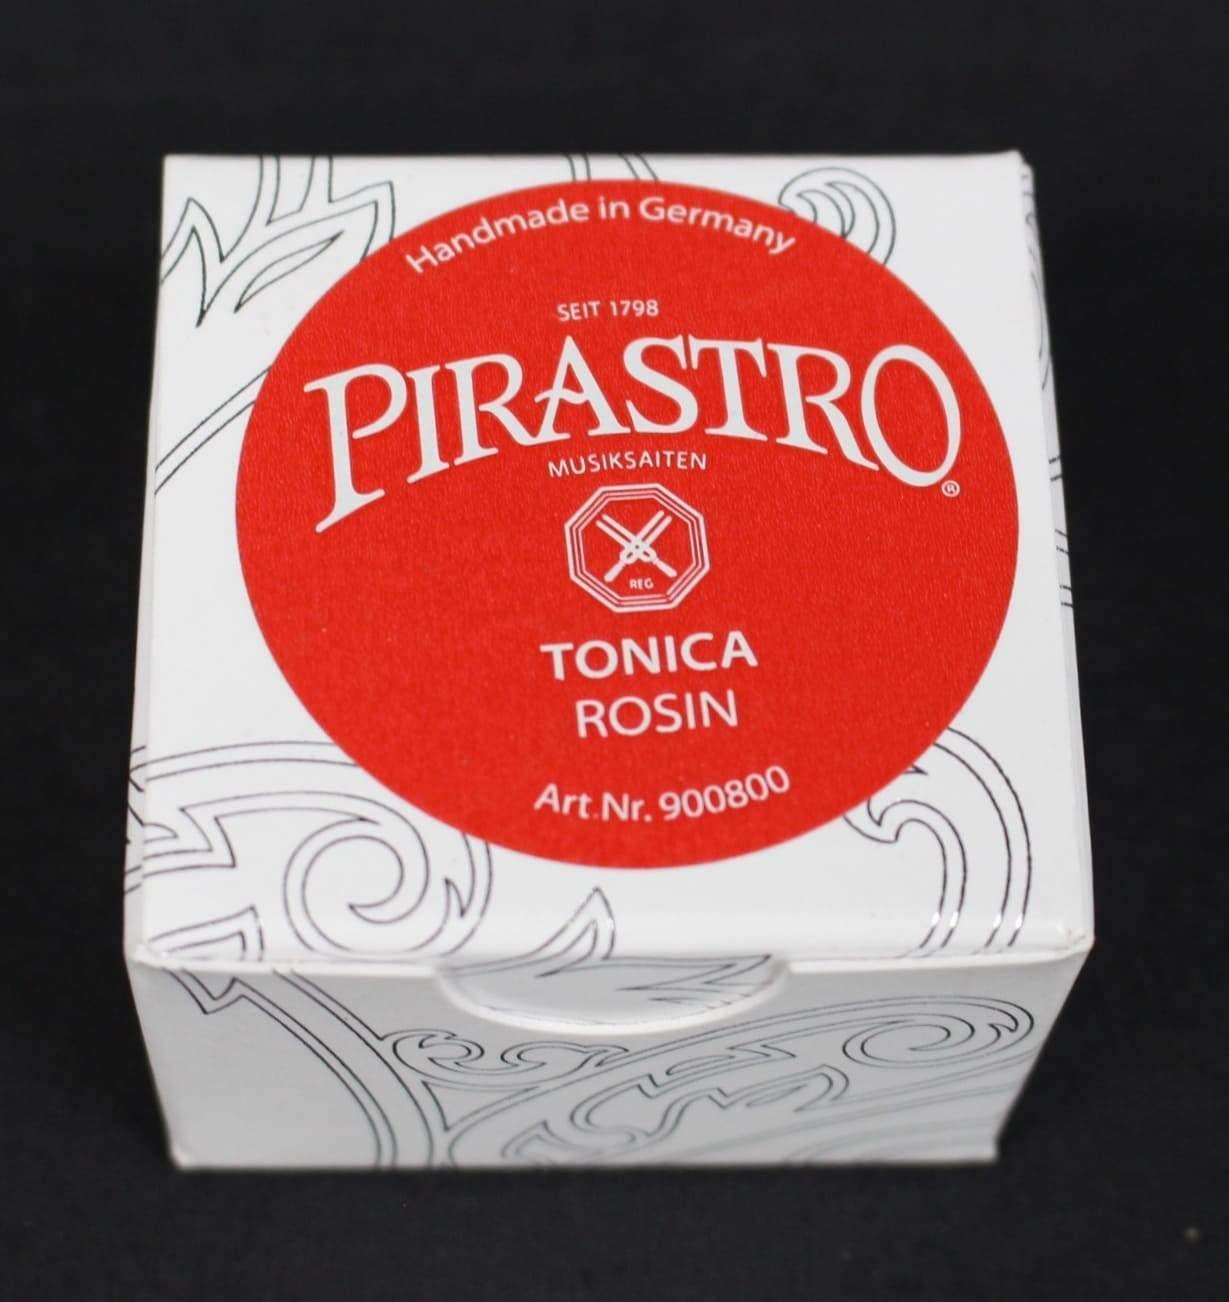 Pirastro Tonica Rosin - Orchestral - Strings - Accessories by Pirastro at Muso's Stuff